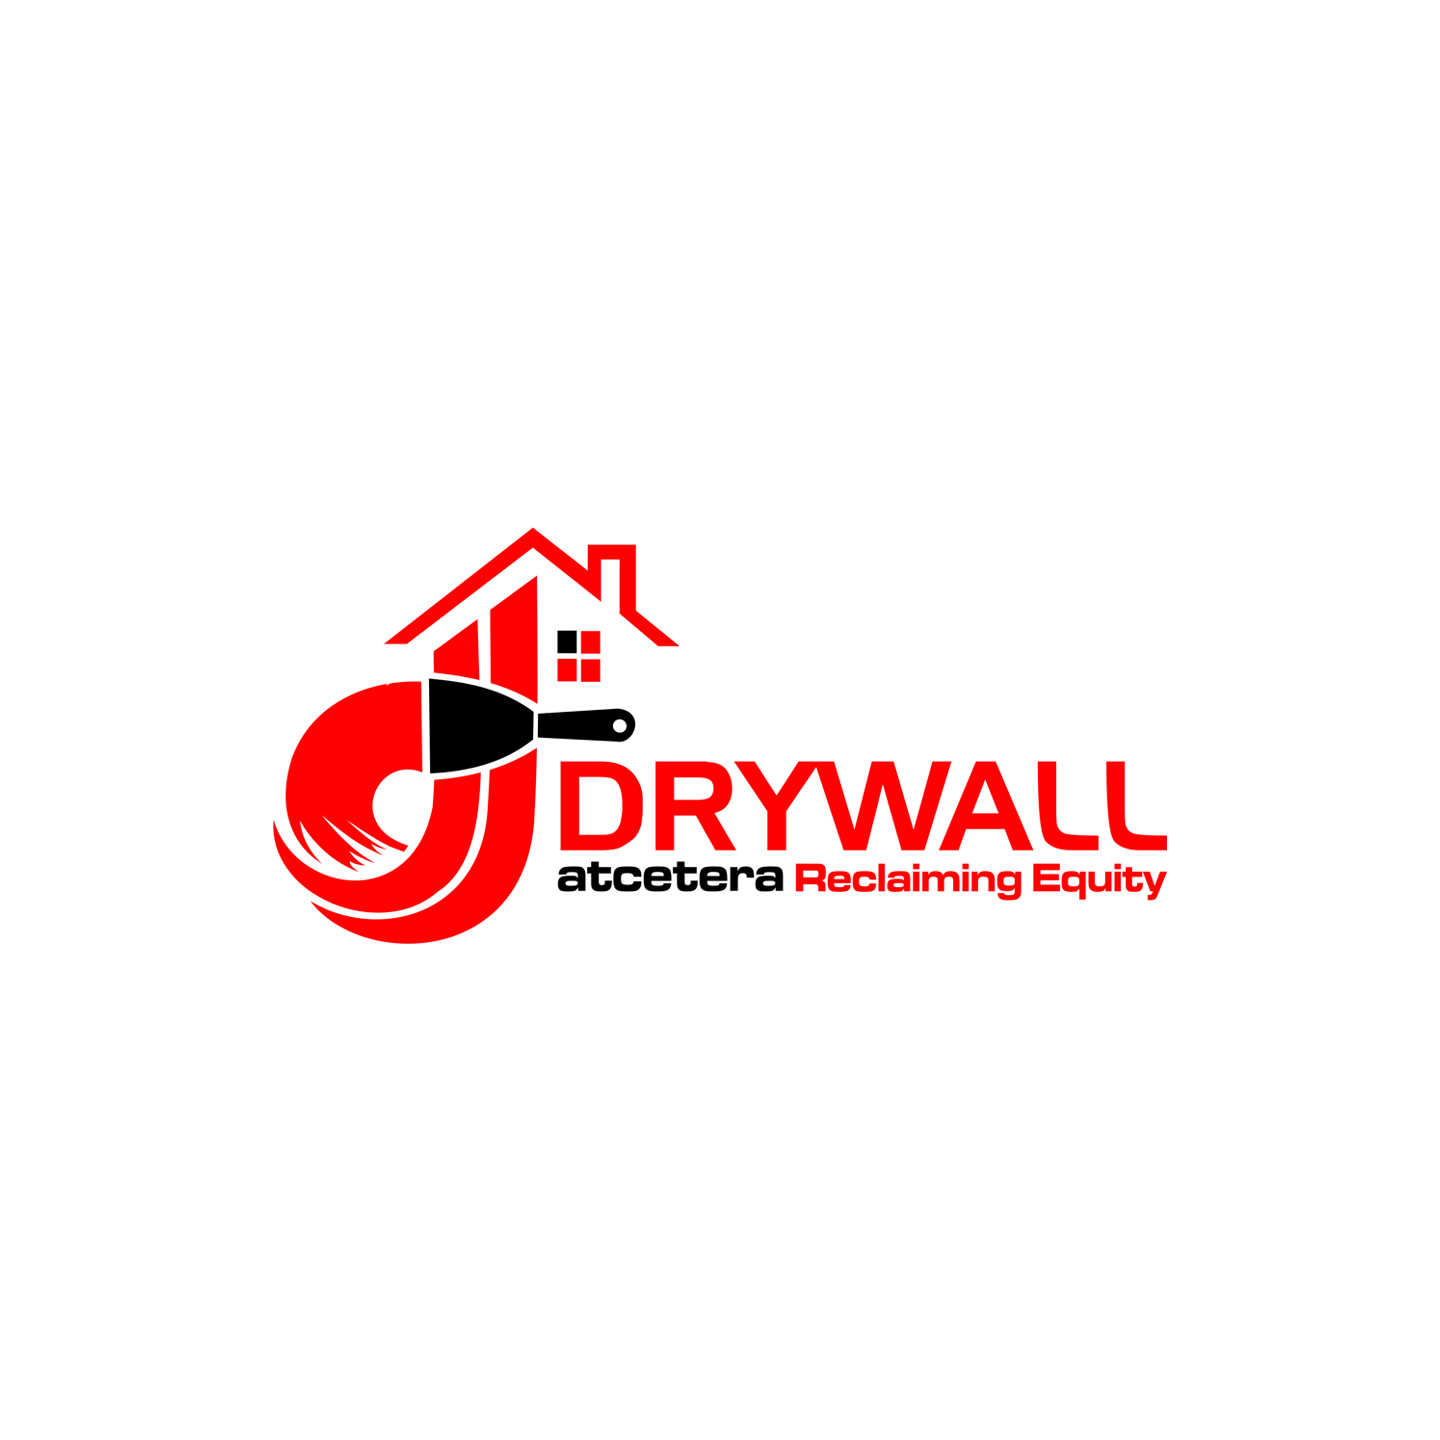 drywall logos business cards 3